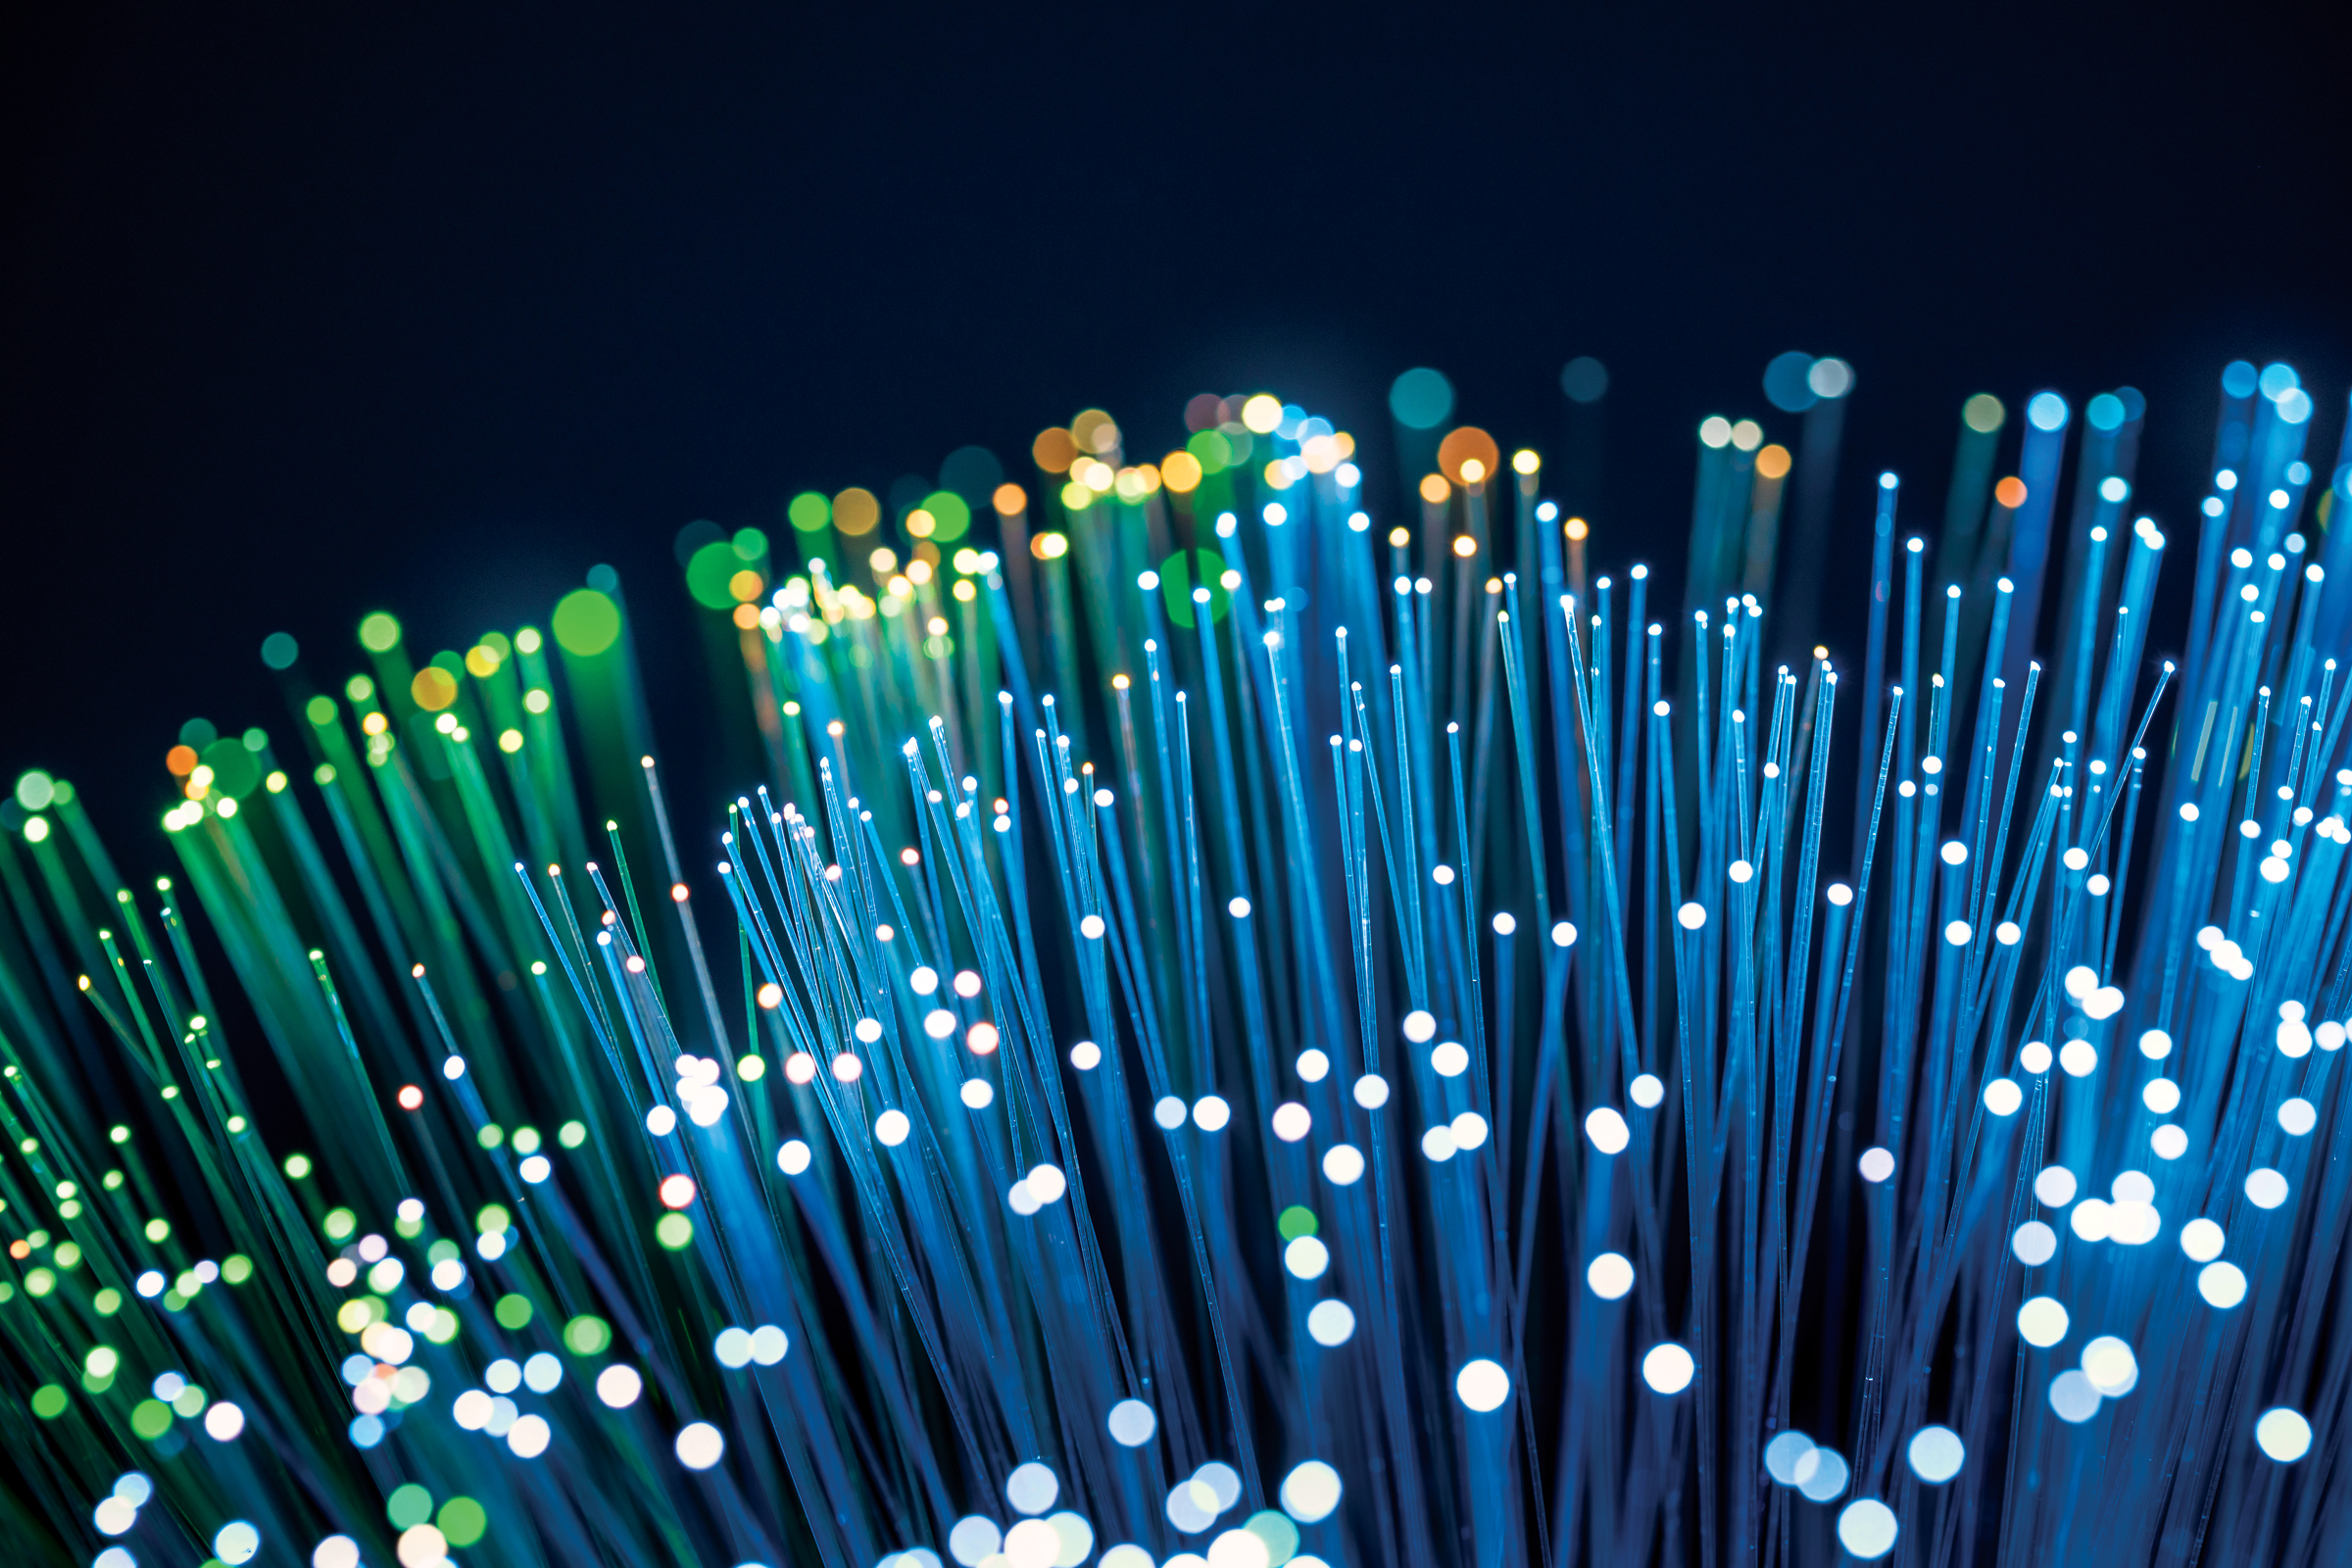 As telecom demands grow, optical fibers will need to level up